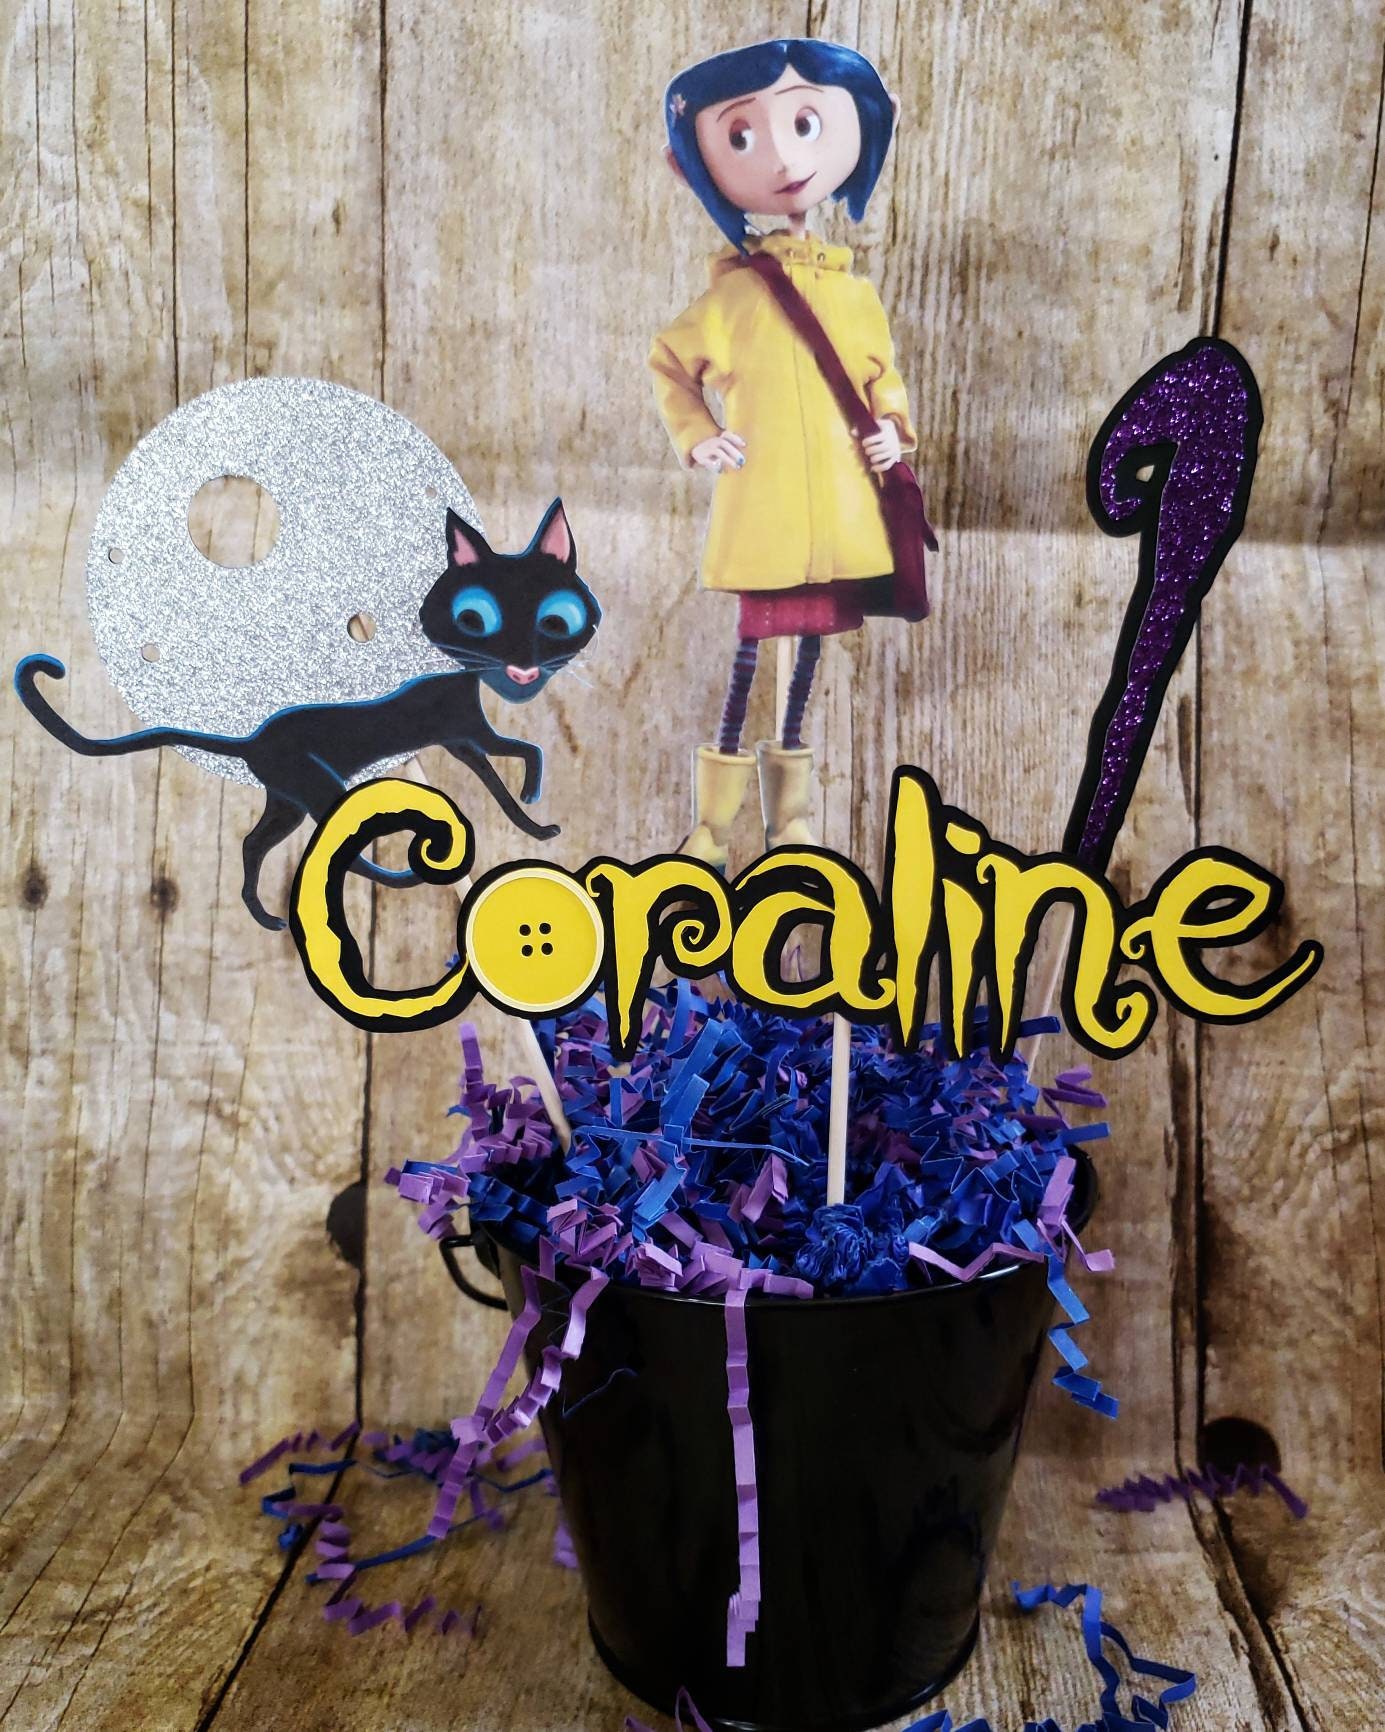 16 Coraline Birthday Party decorations ideas